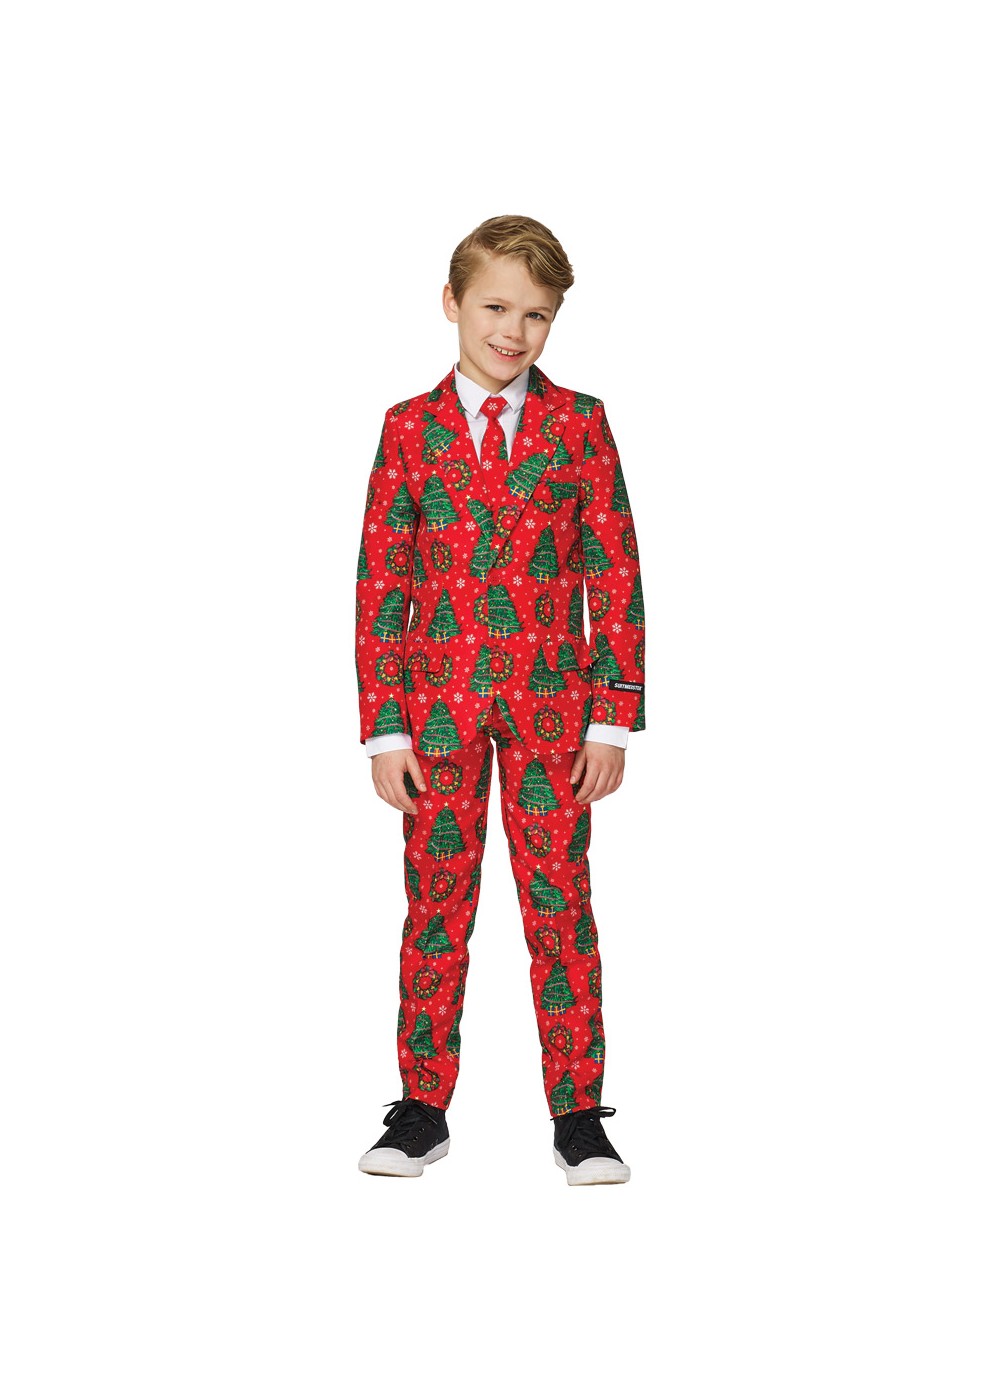 Boys Christmas Suit